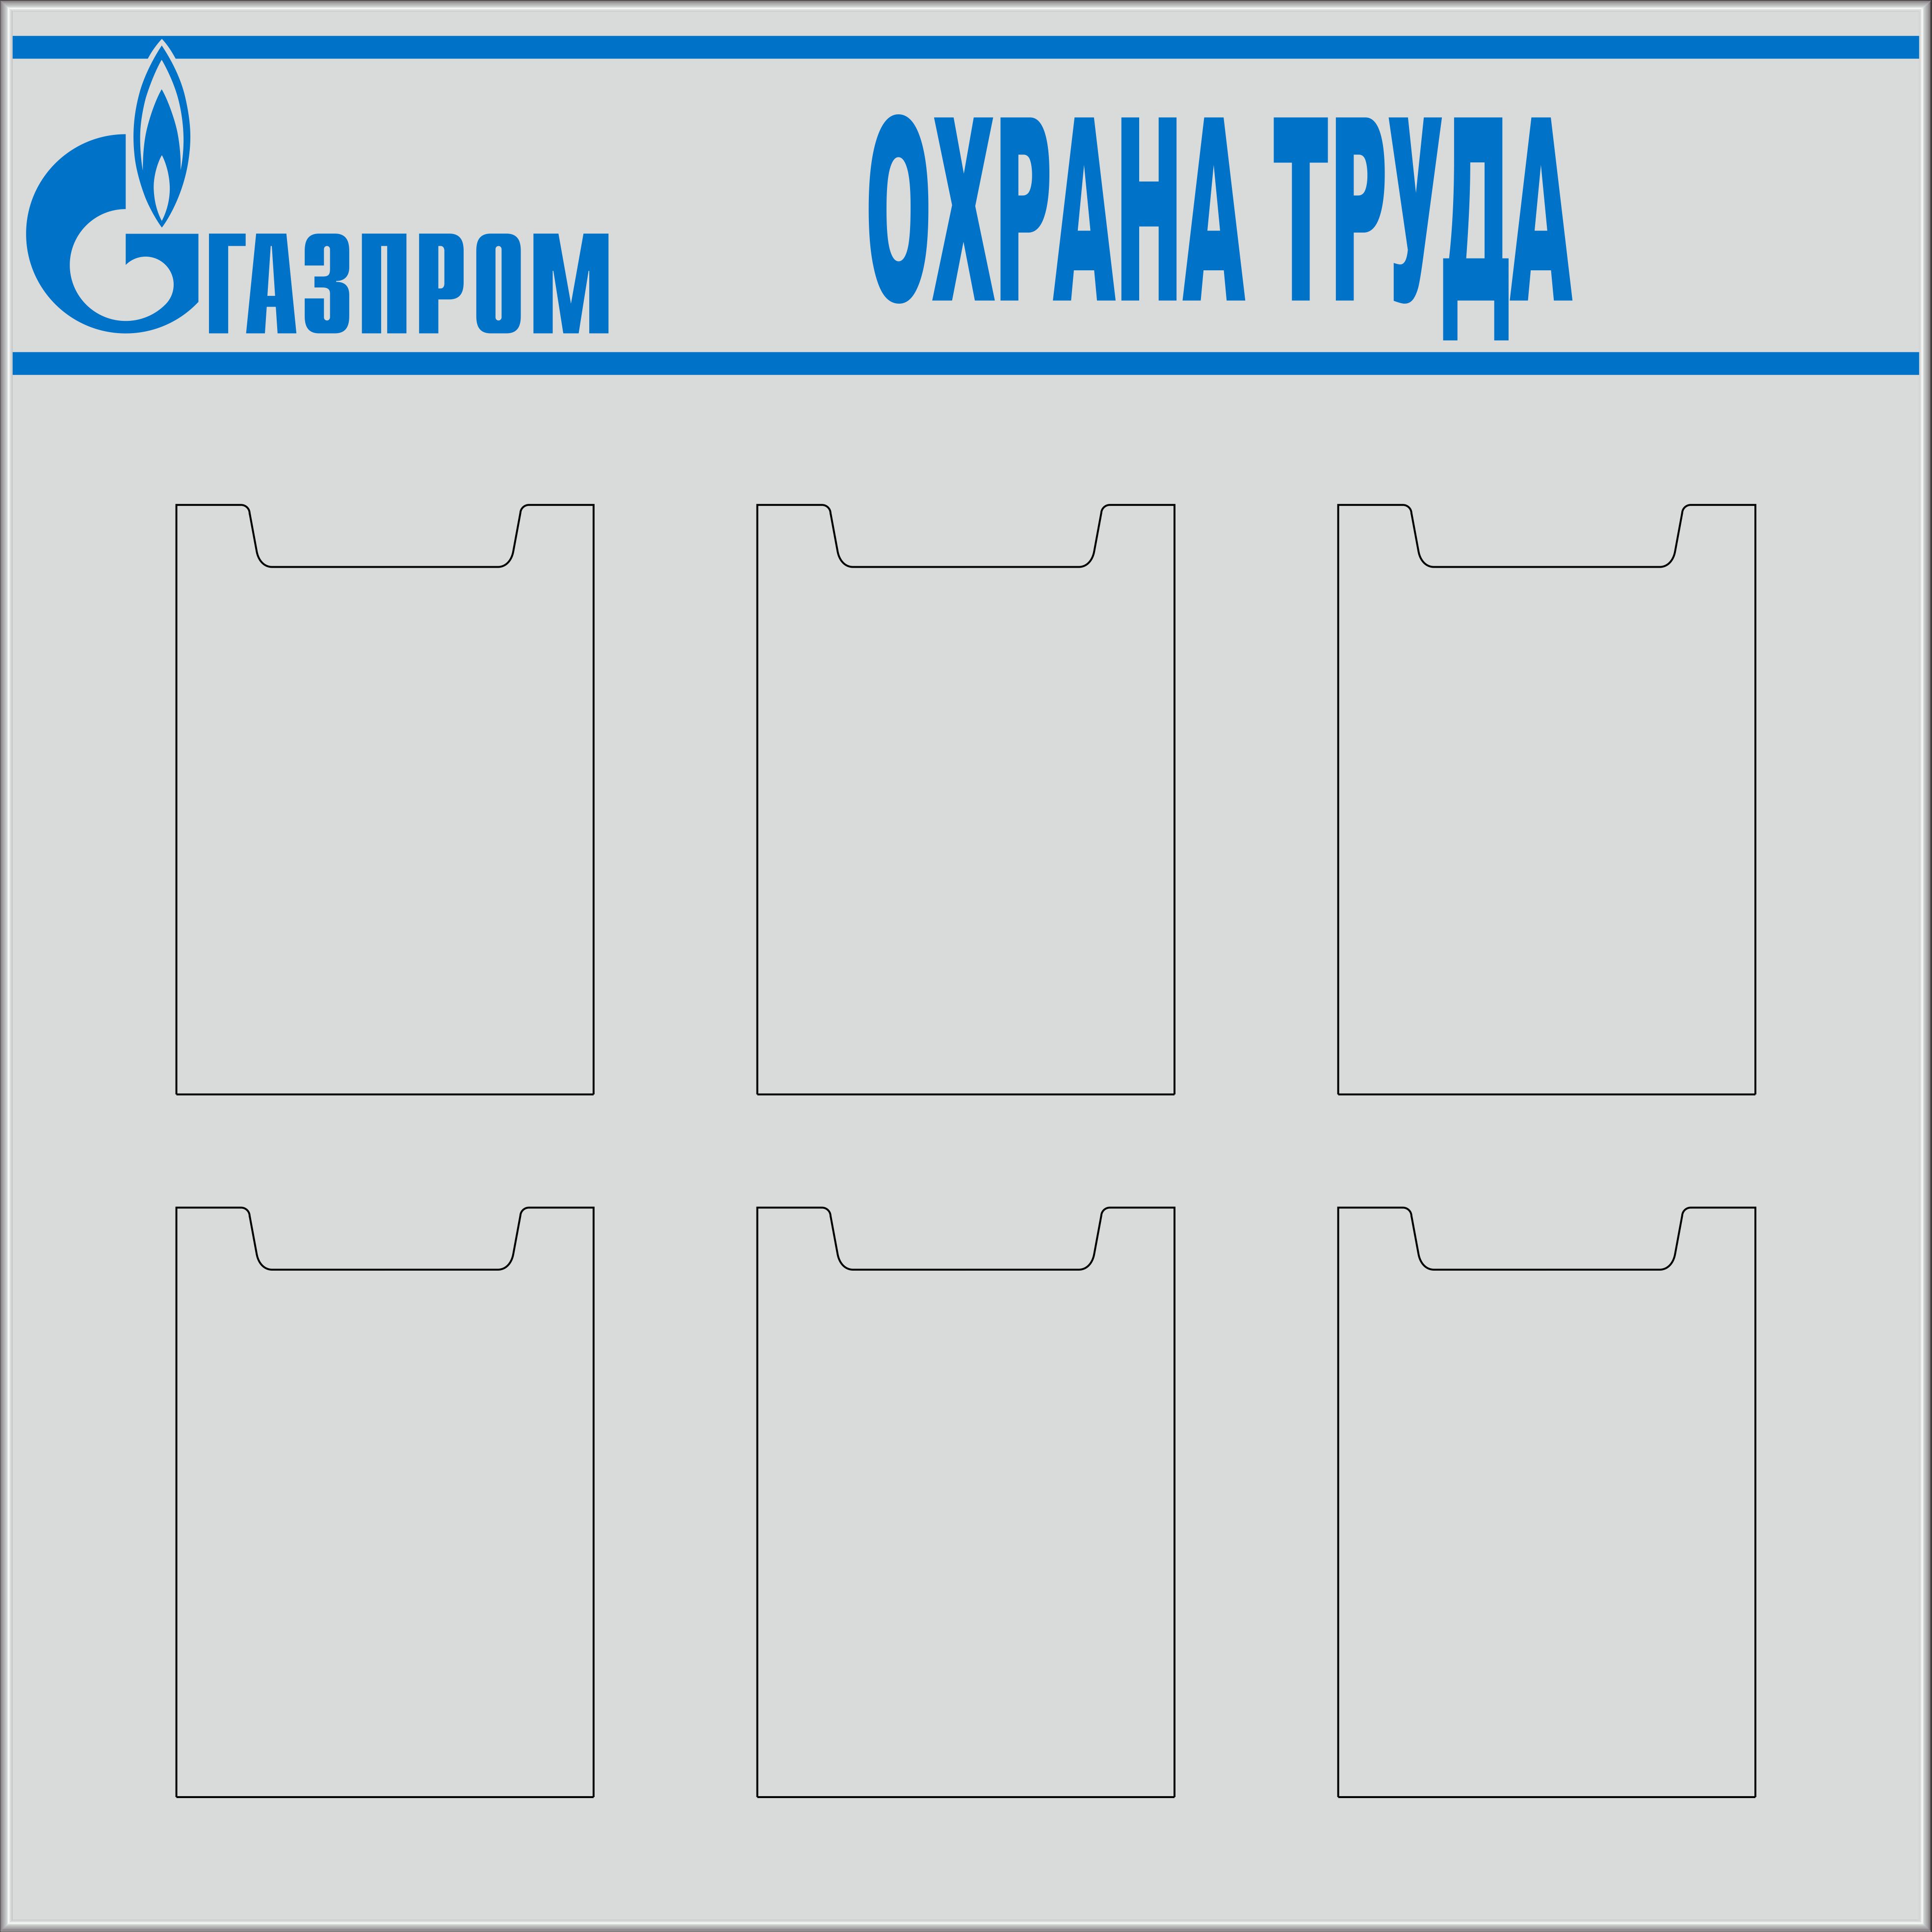 Стенд Охрана труда, 6 плоских карманов А4, фриз с надписью и логотипом Газпром. (1000х1000; Пластик ПВХ 4 мм; Пластик)